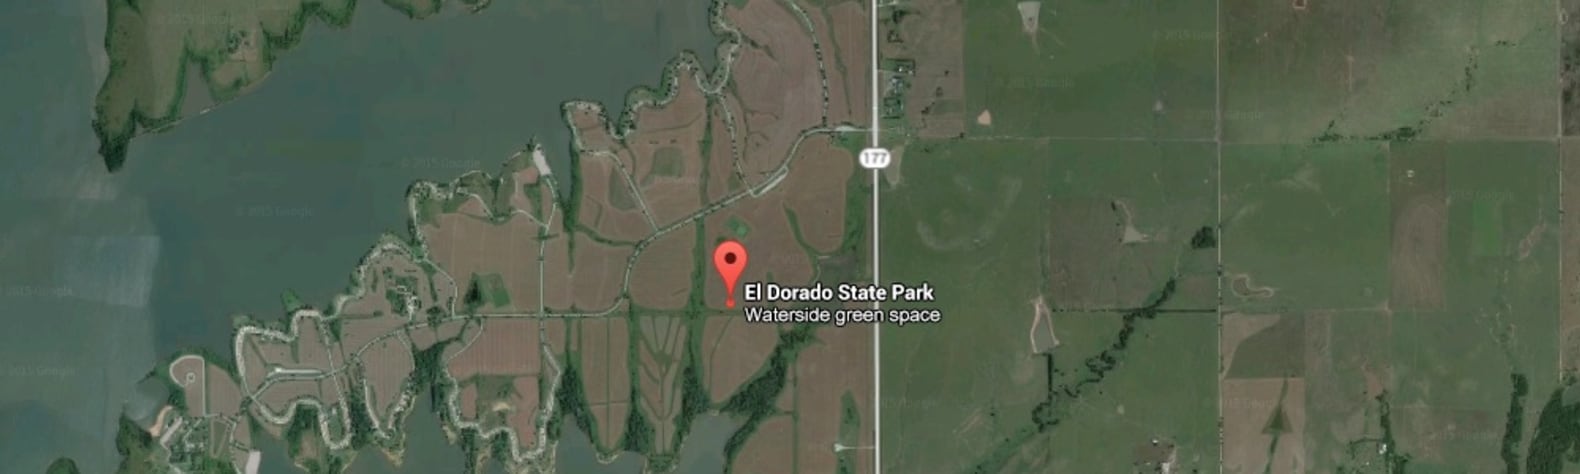 El Dorado State Park